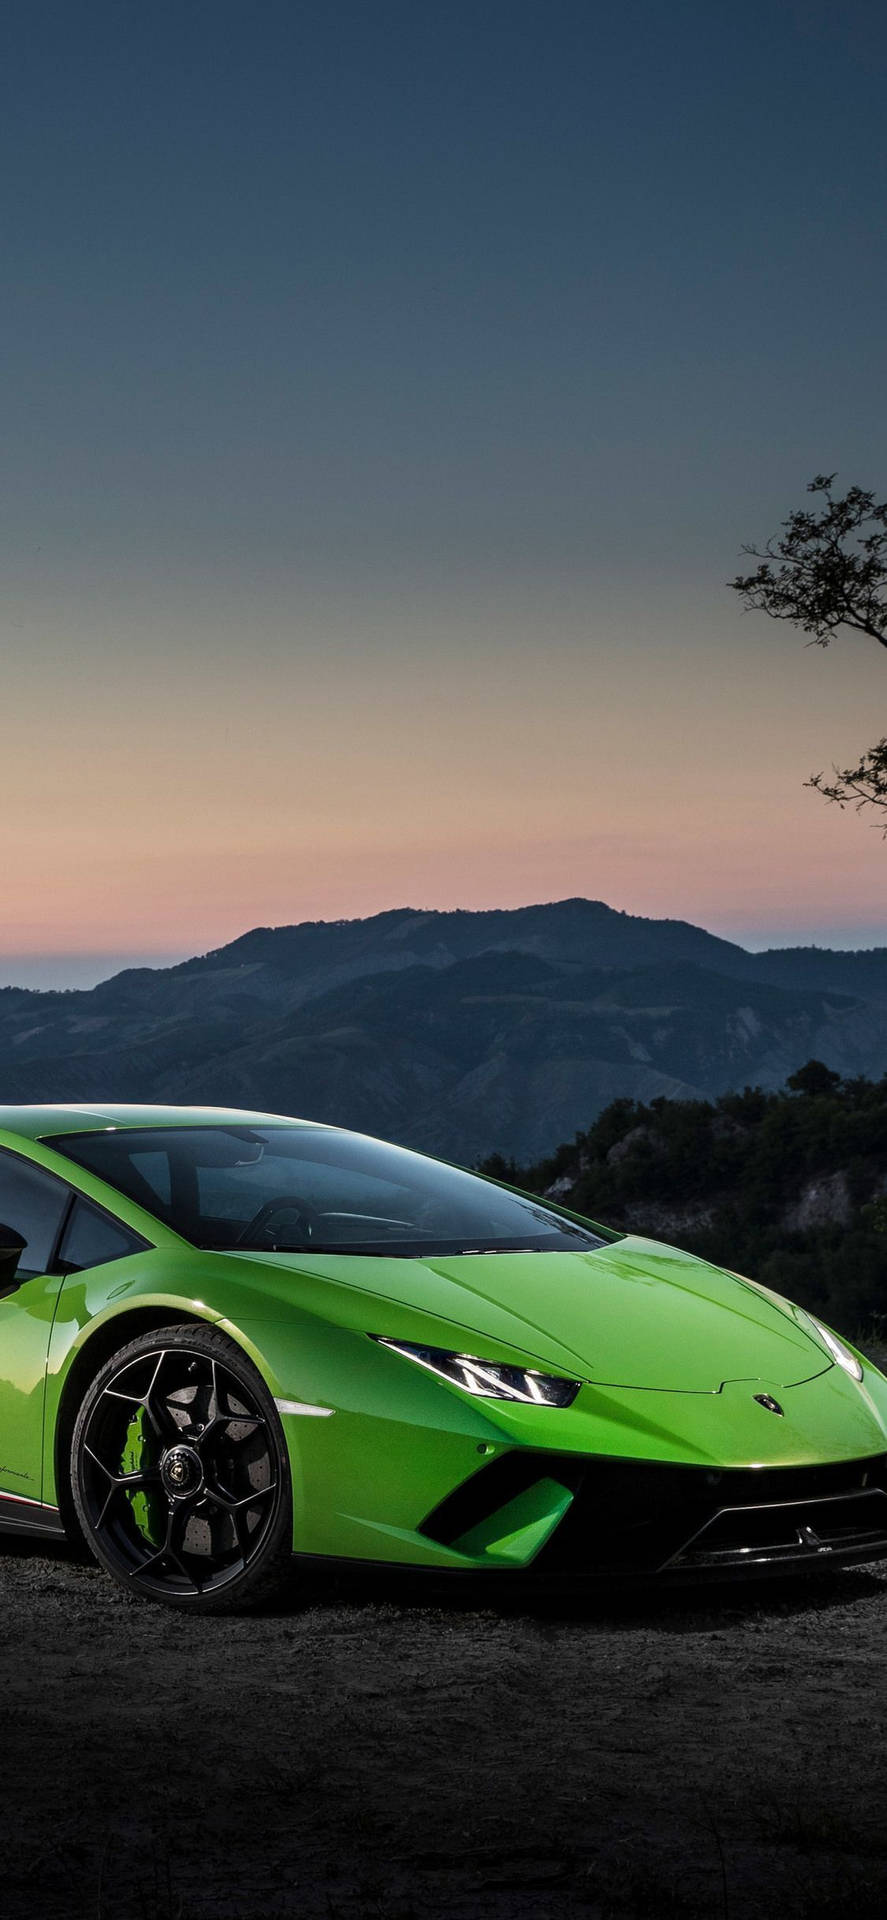 Iphone X Car Green Lamborghini Huracan Background